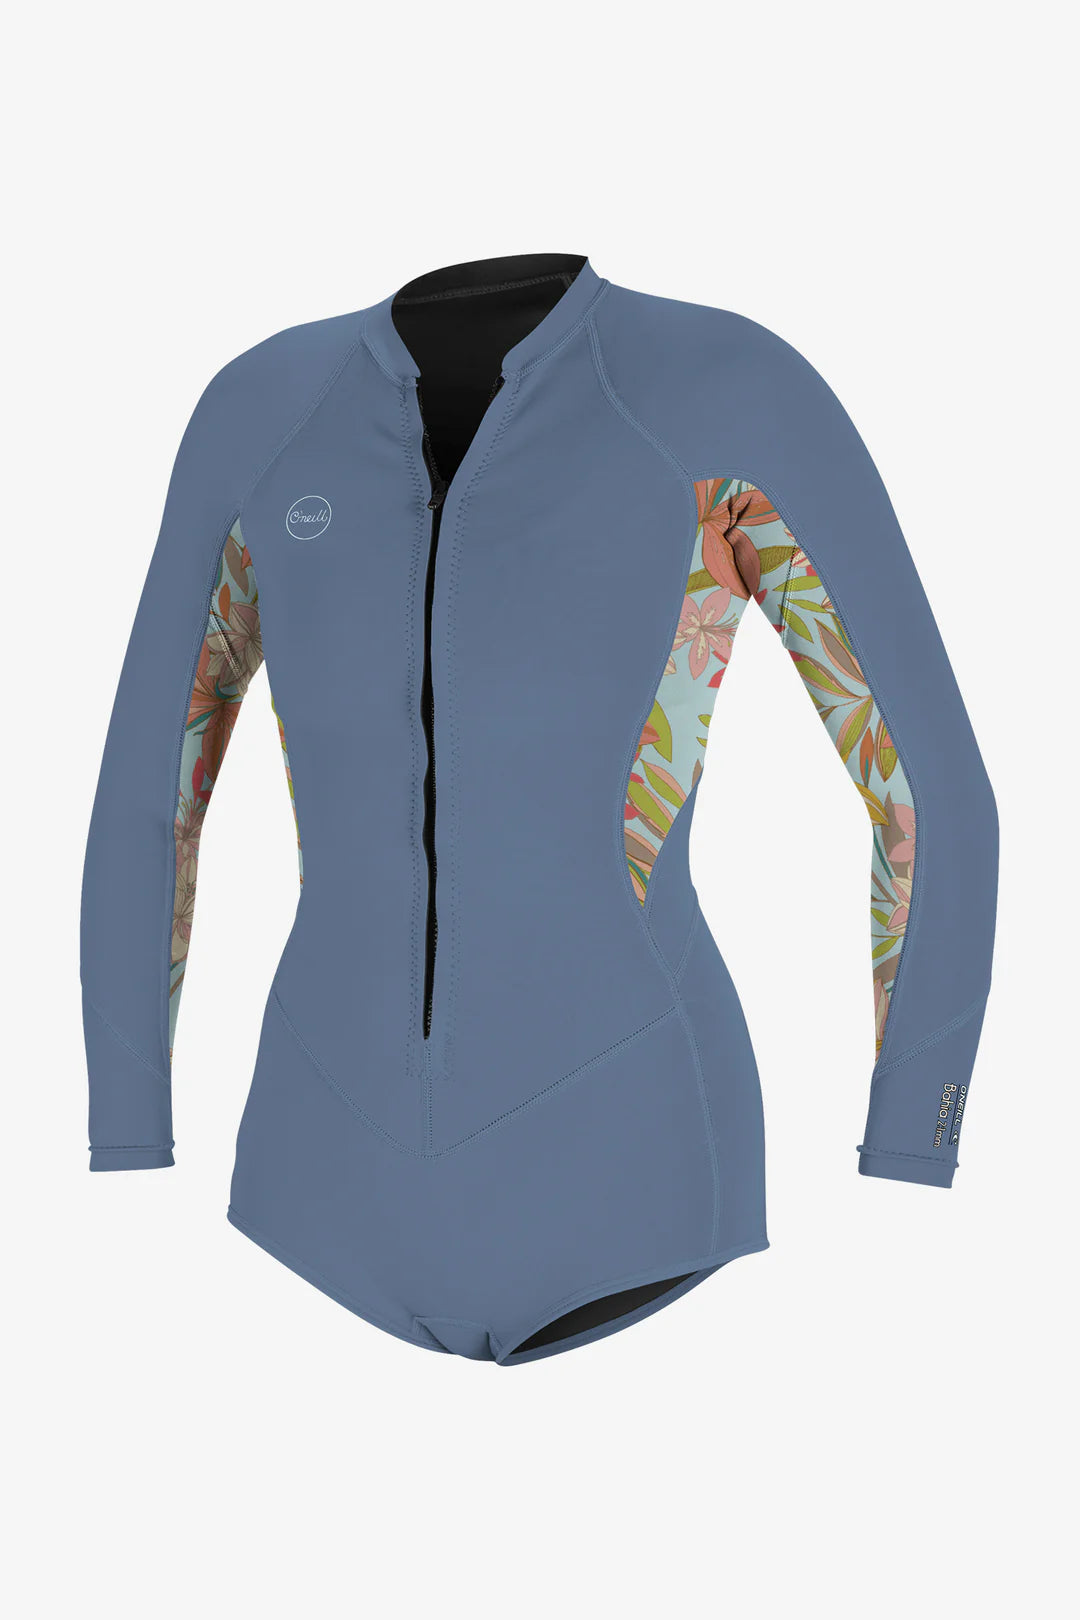 O'Neill Women's Bahia 2mm Front Zip L/S Surf Suit